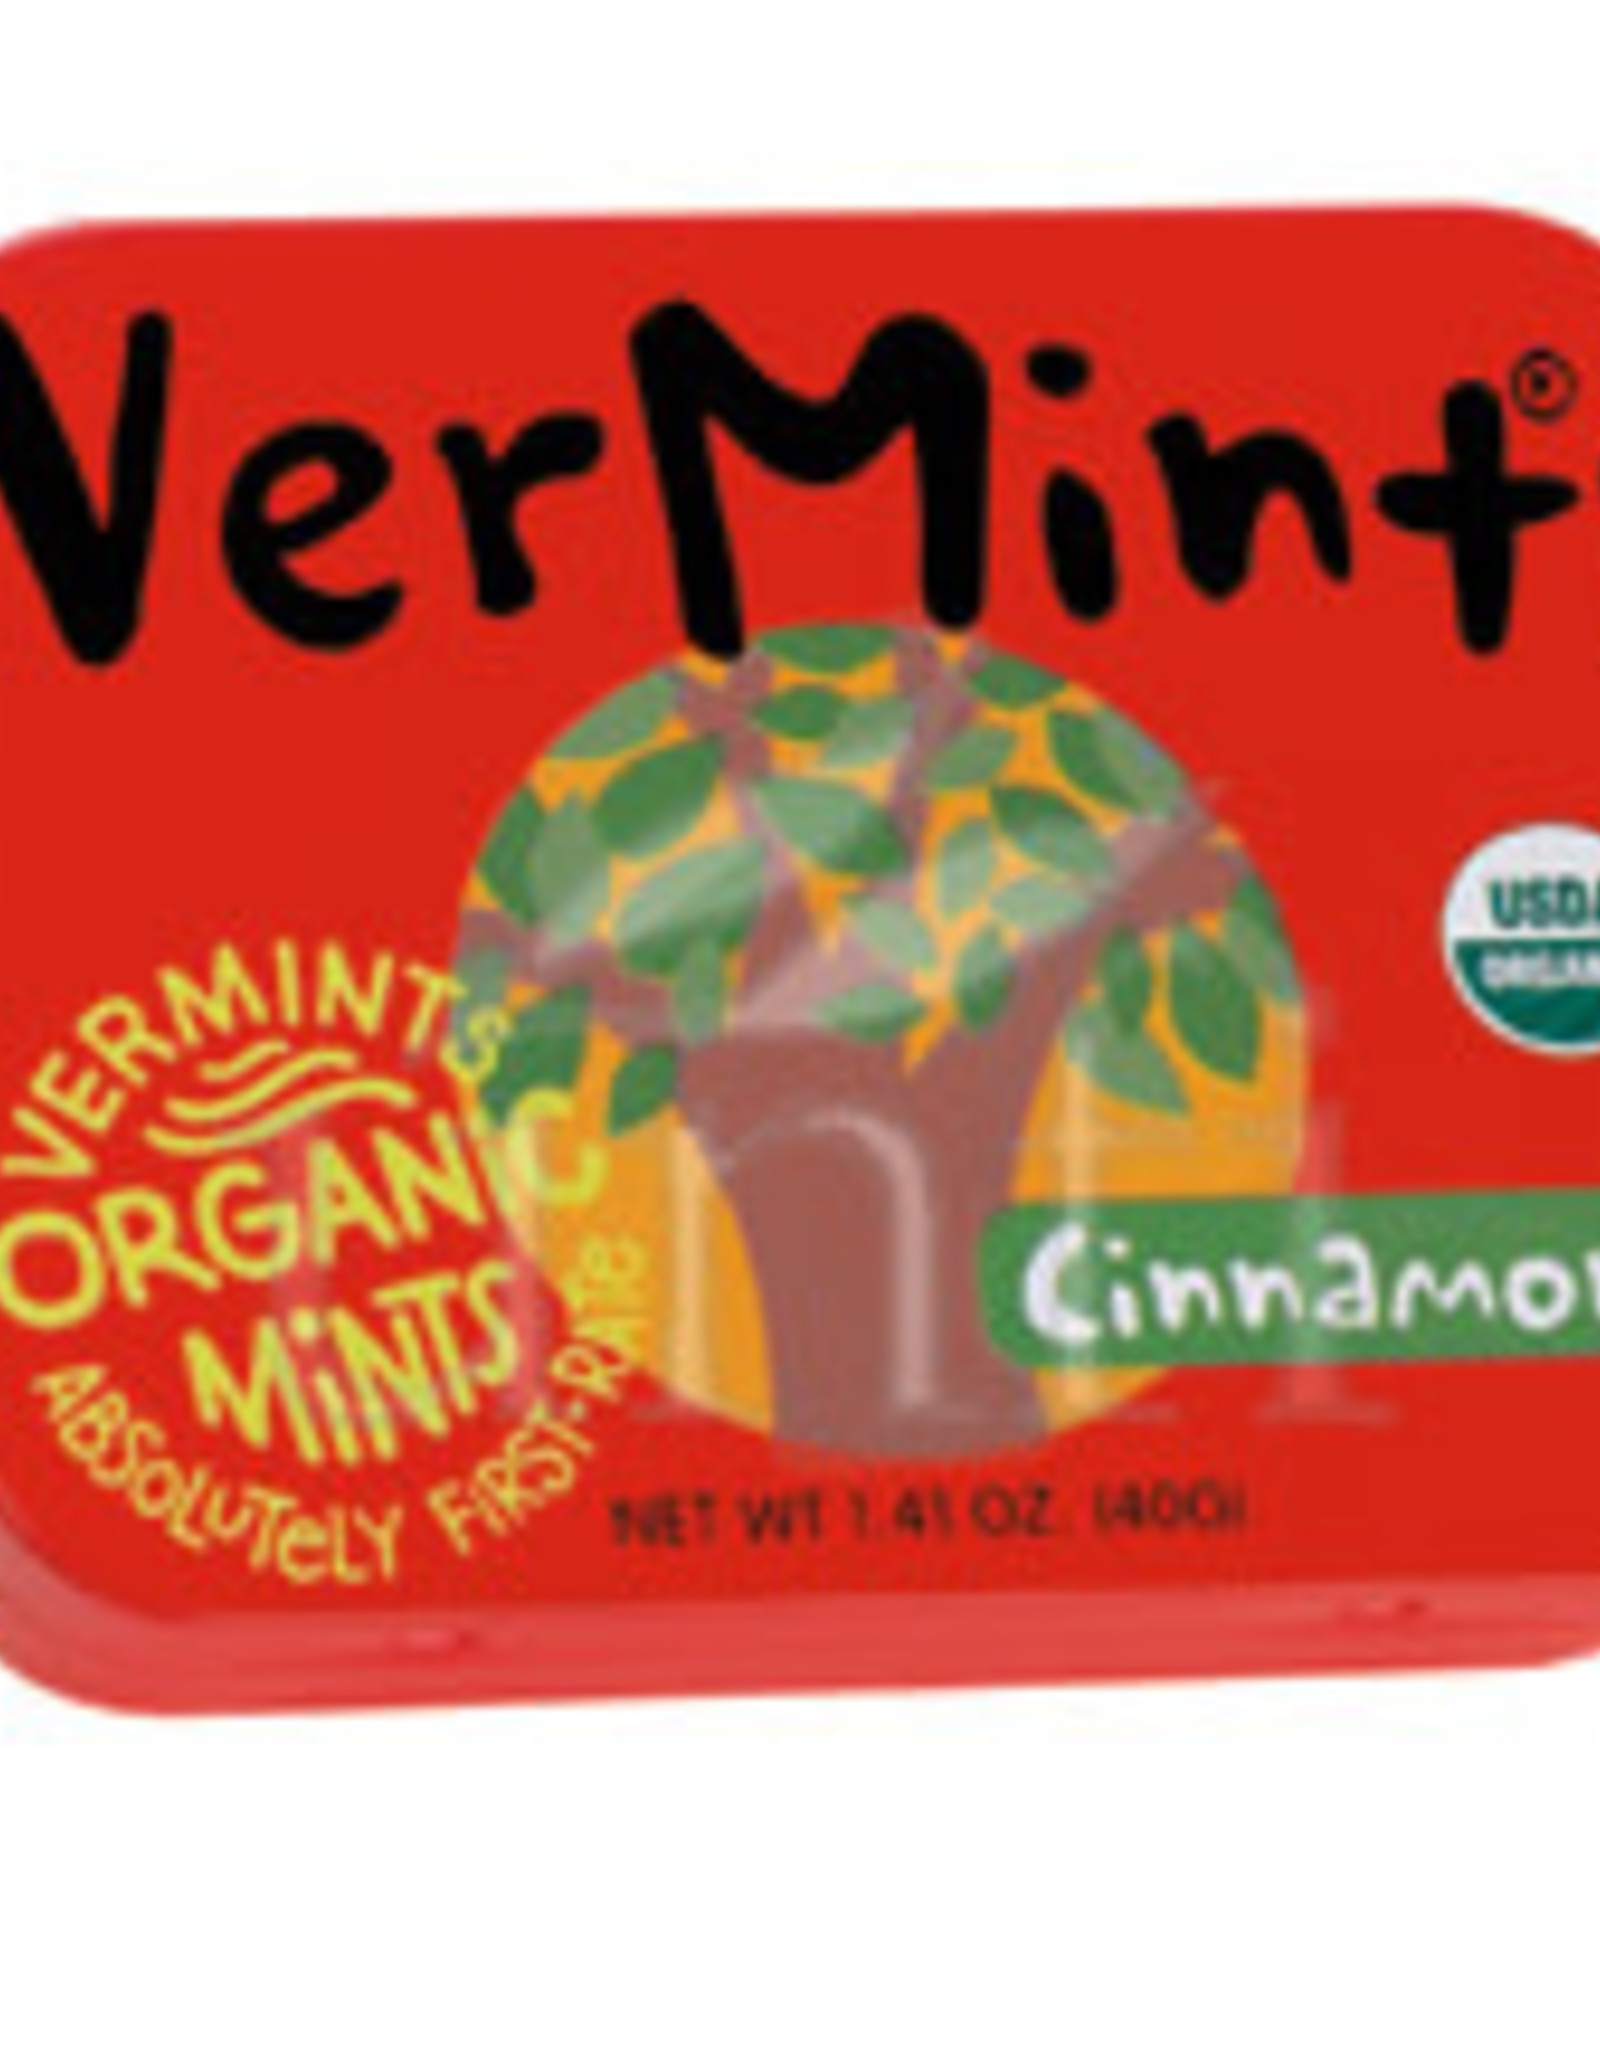 Vermints All Natural Breath Mints Cinnamon